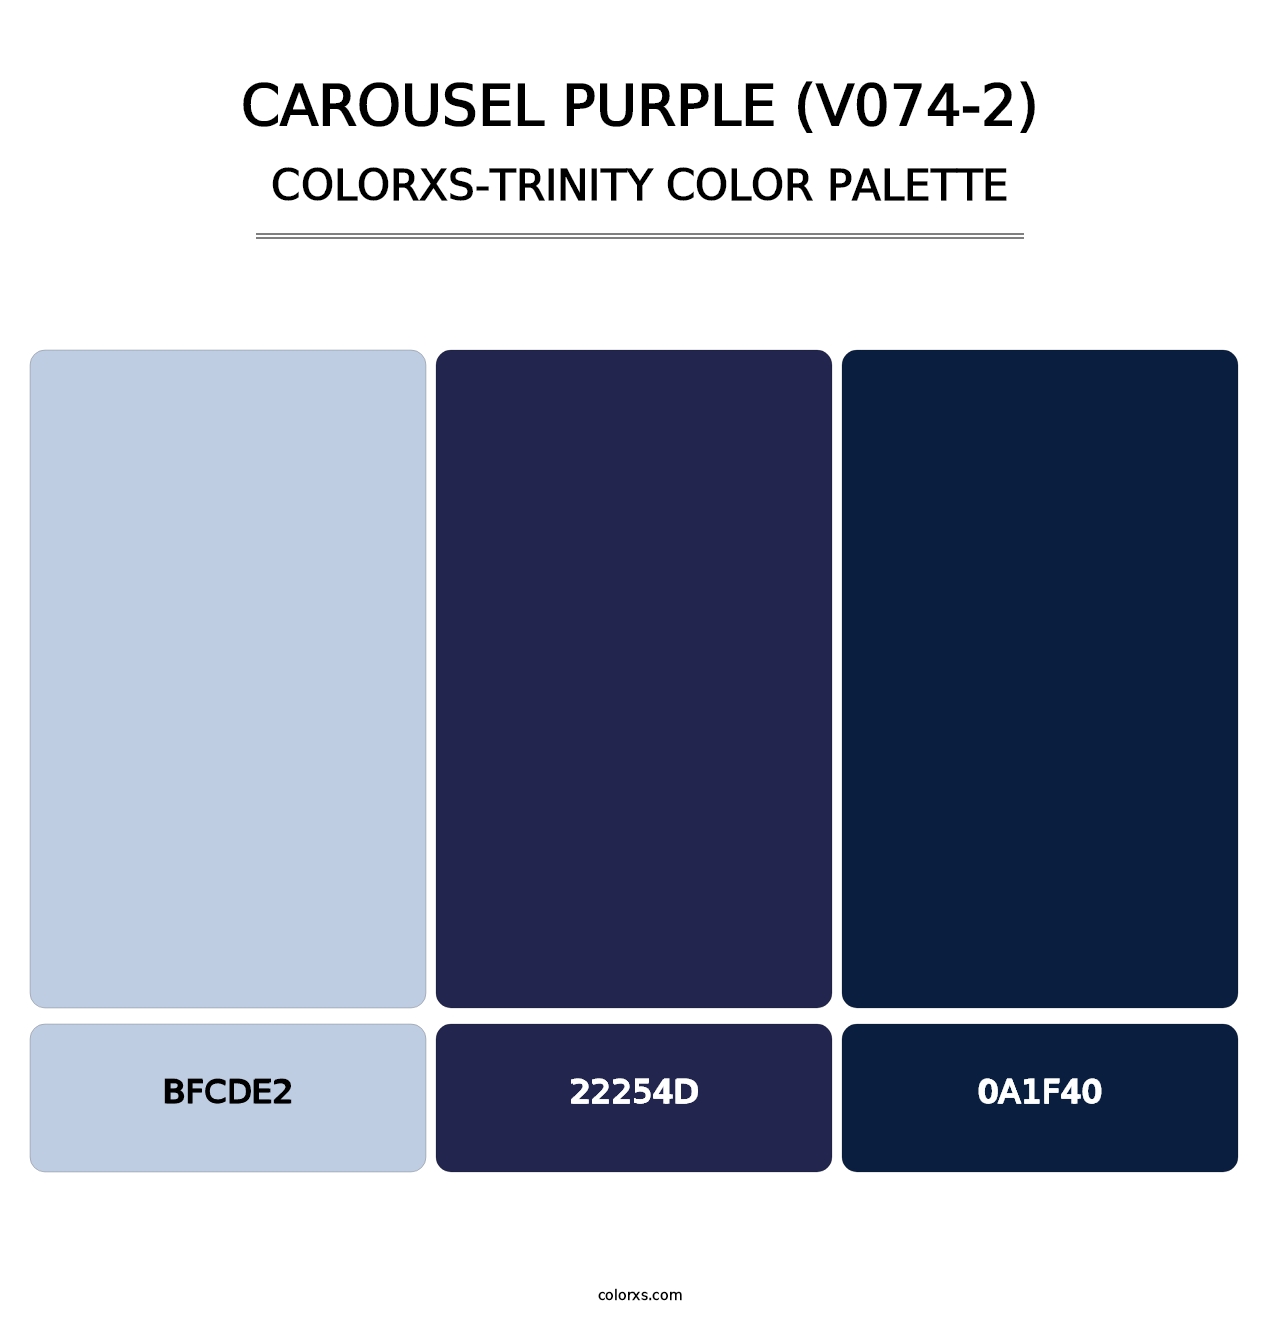 Carousel Purple (V074-2) - Colorxs Trinity Palette